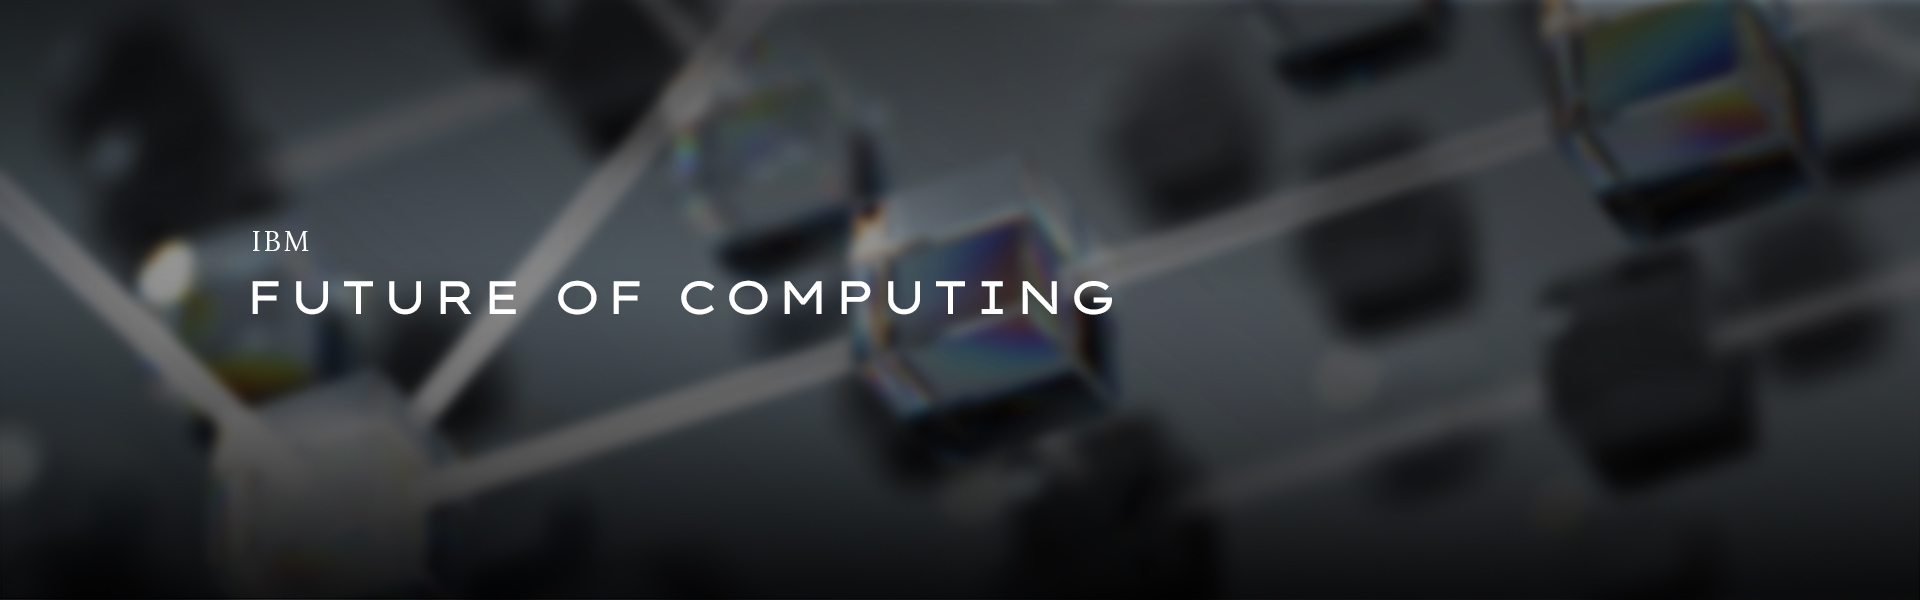 IBM Computing homepage on